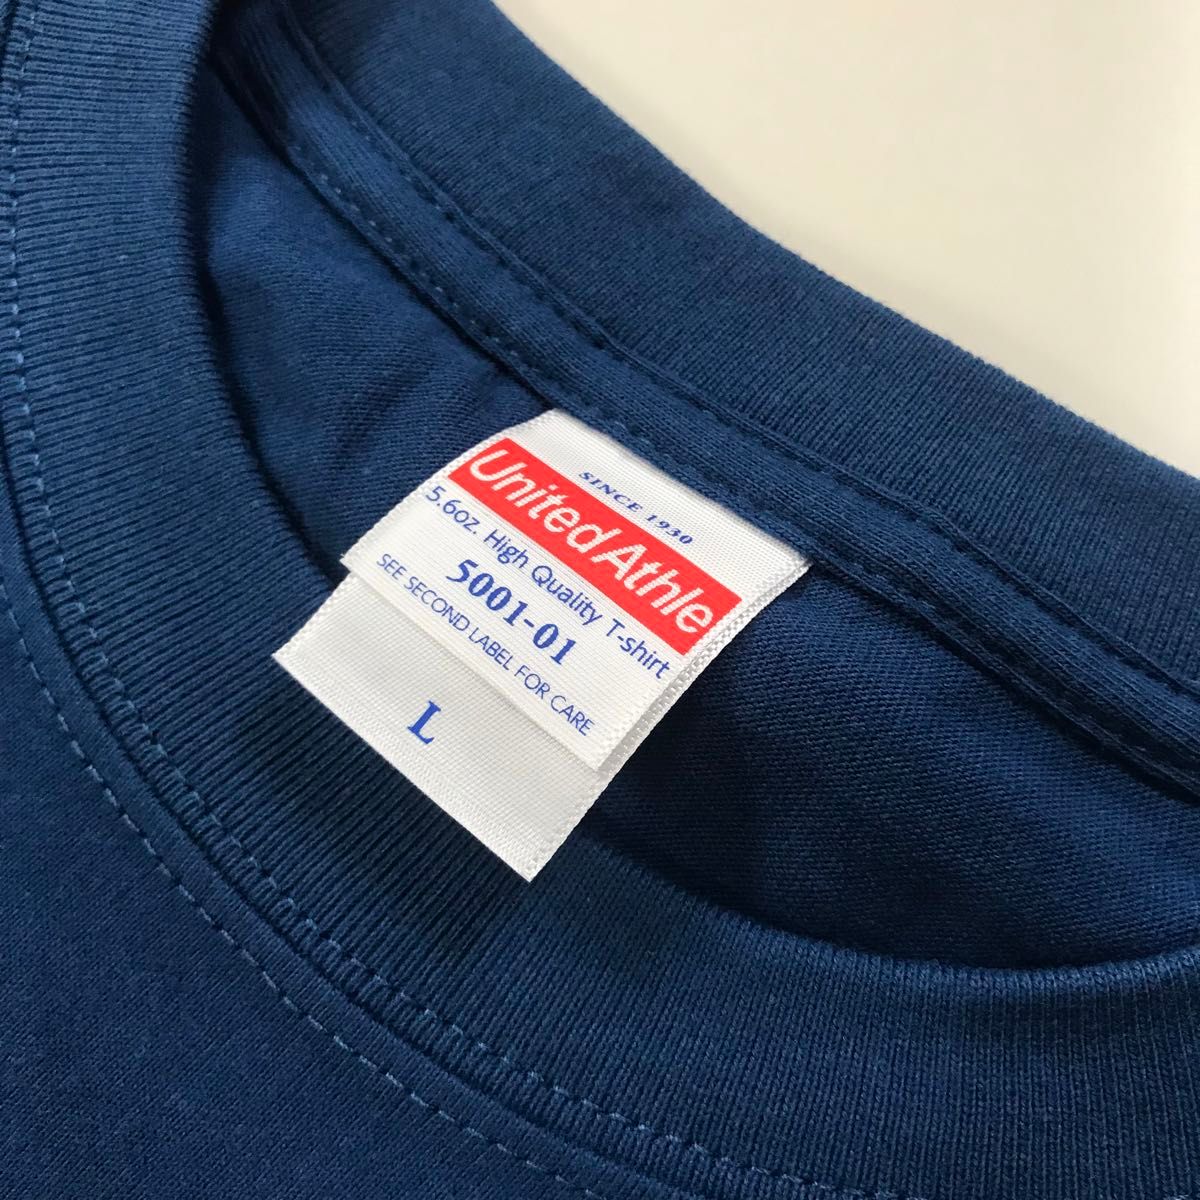 Tシャツ 半袖 5.6オンス ハイクオリティー【5001-01】L クラシックブルー 綿100%